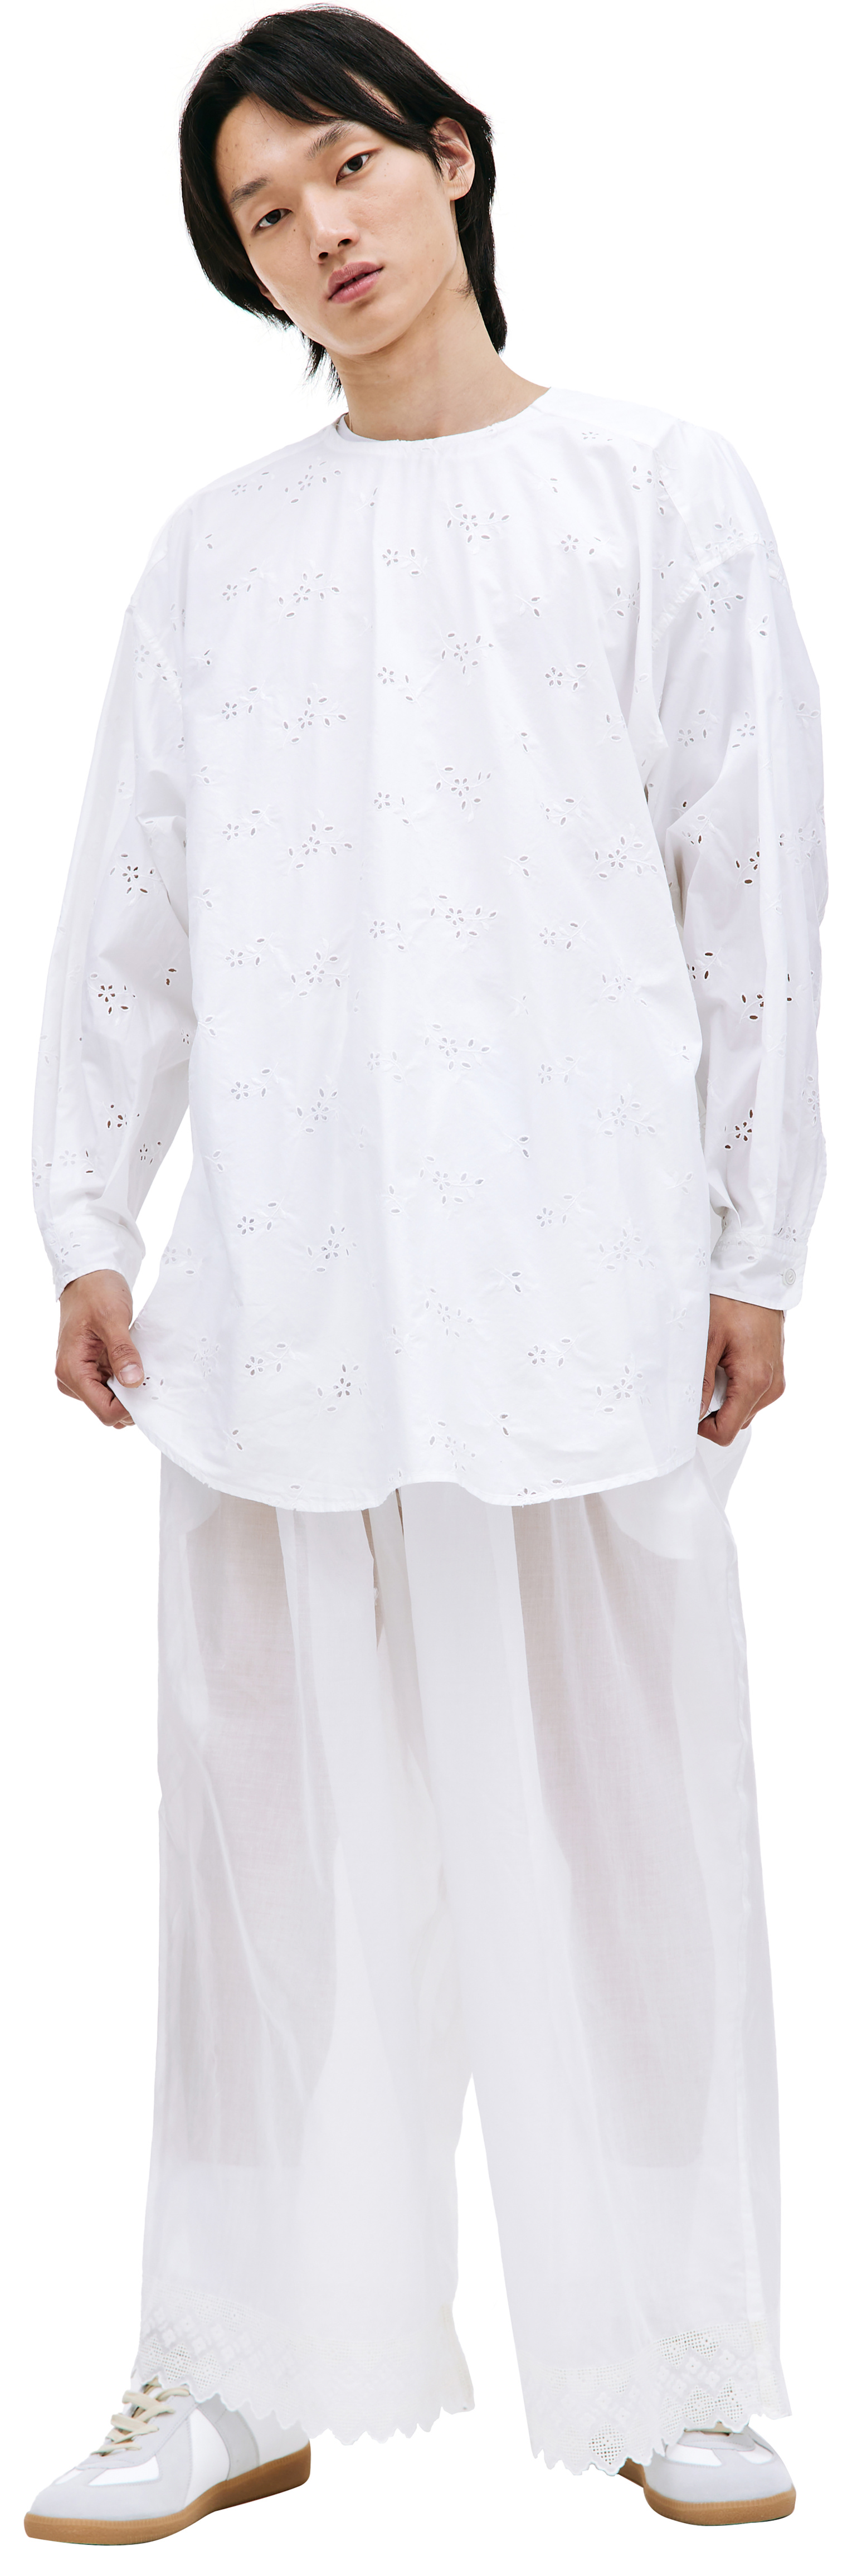 Buy Hed Mayner men white cotton shirt for $495 online on SV77, HM00S68